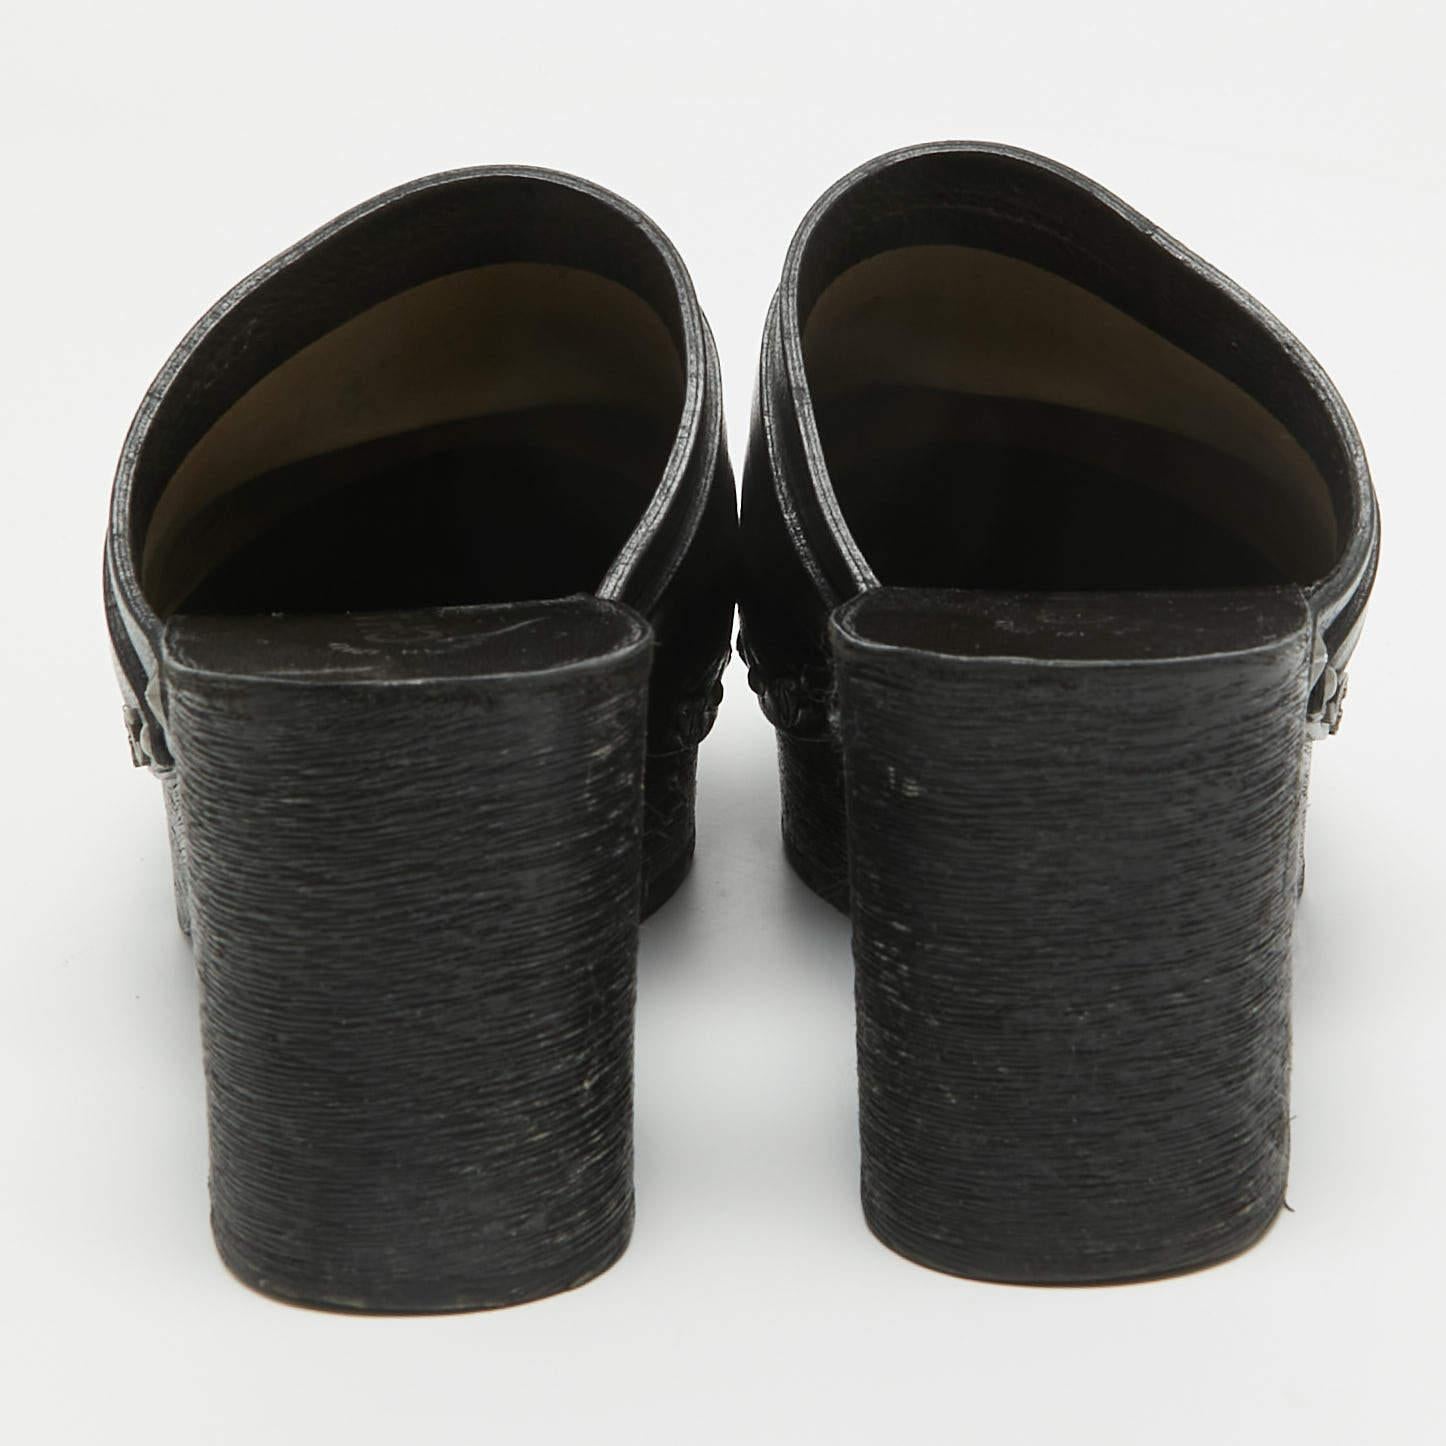 Chanel Black Leather Studded Platform Clogs Size 37 1